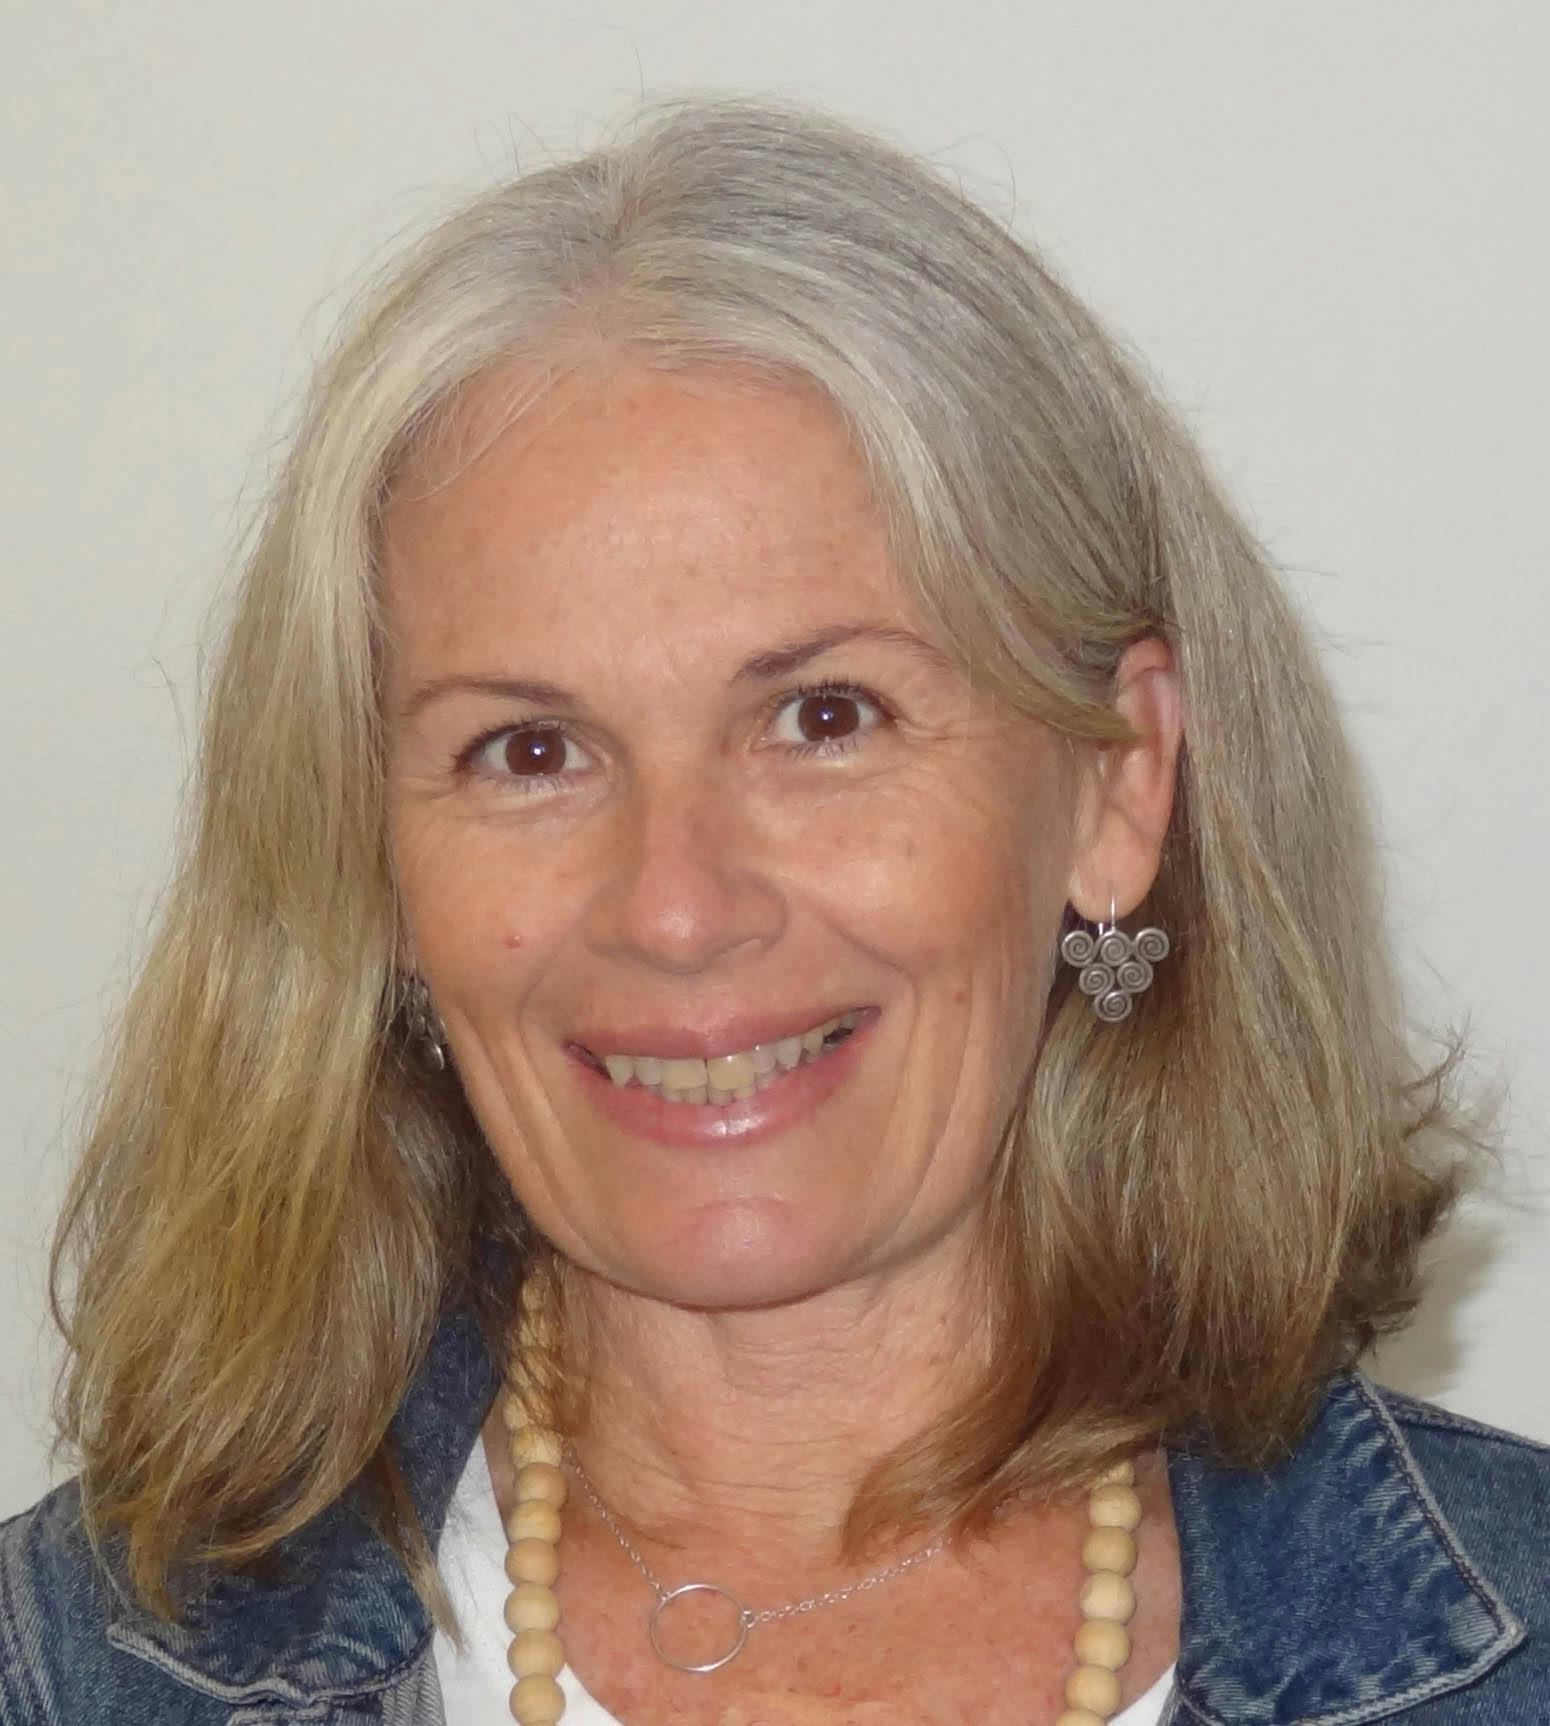 Team member, Suzanne Lynch